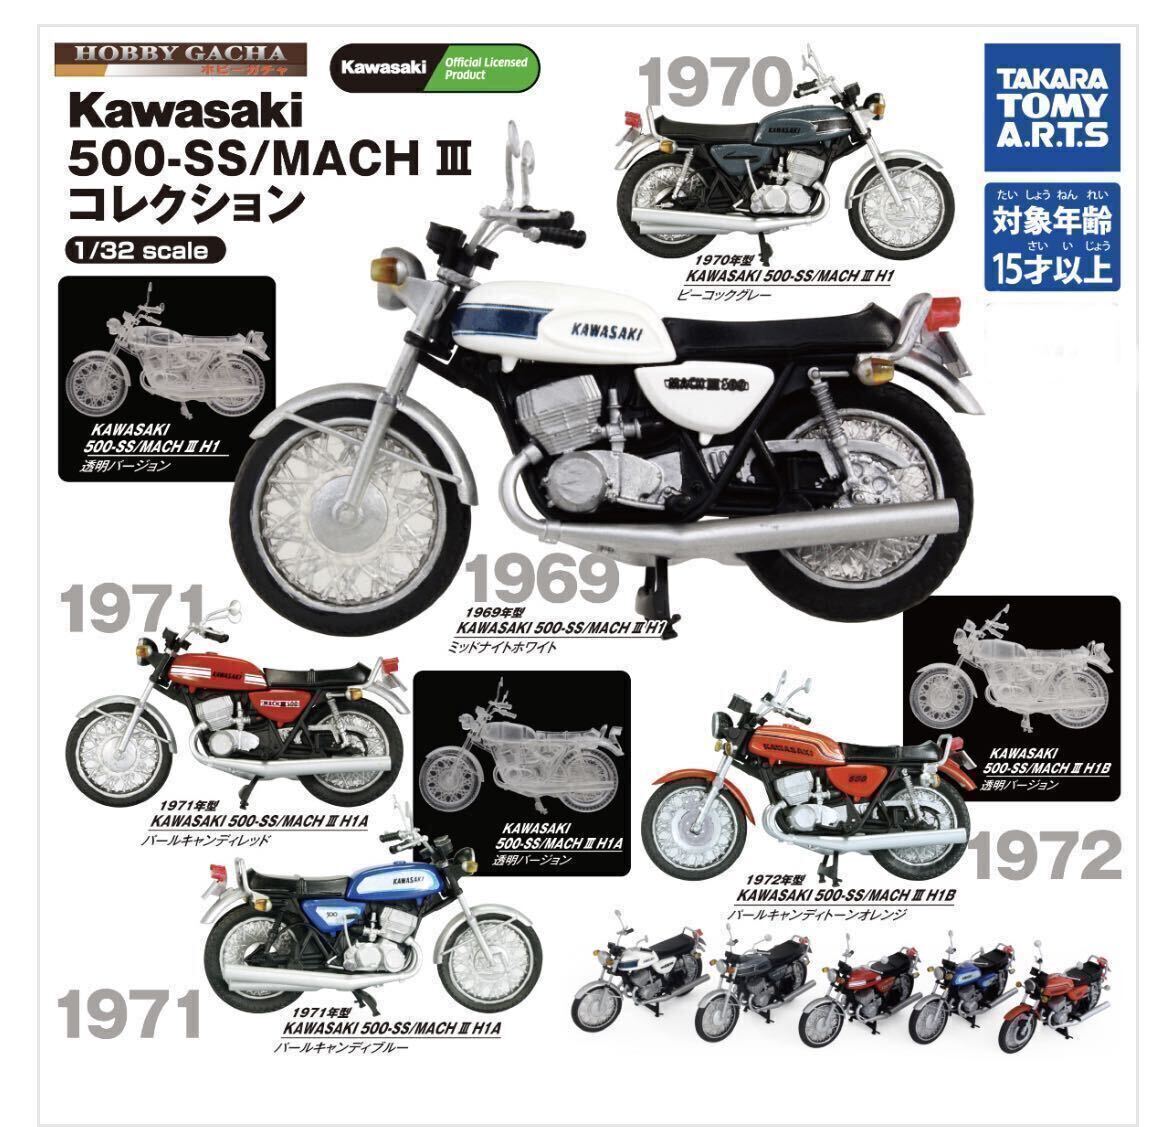 KAWASAKI 500-SS/MACH III コレクション 1972年型 H1B パールキャンディトーンオレンジ バンダイ ガチャ新品未使用品_画像2